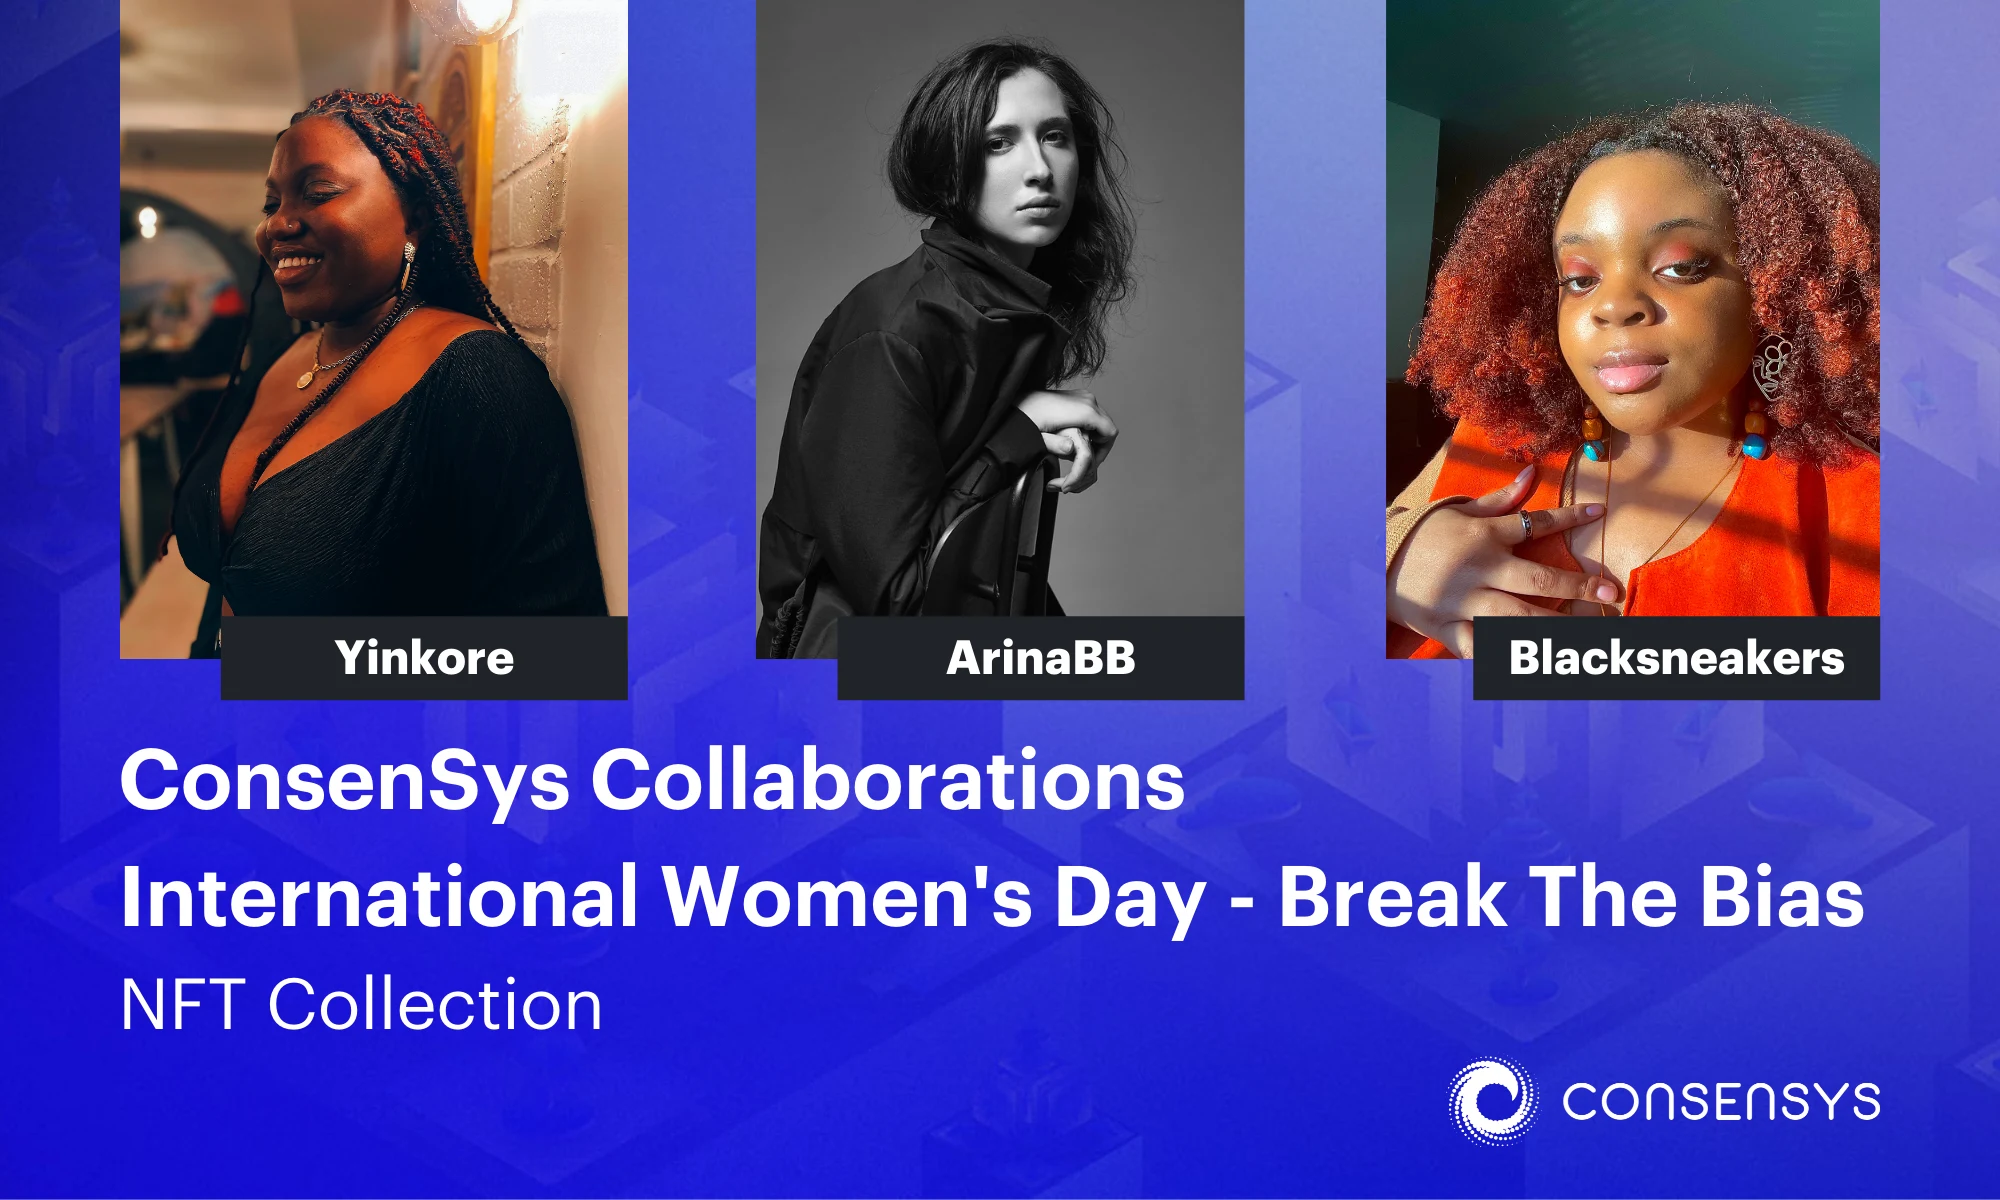 Image: International Women’s Day - Break the Bias